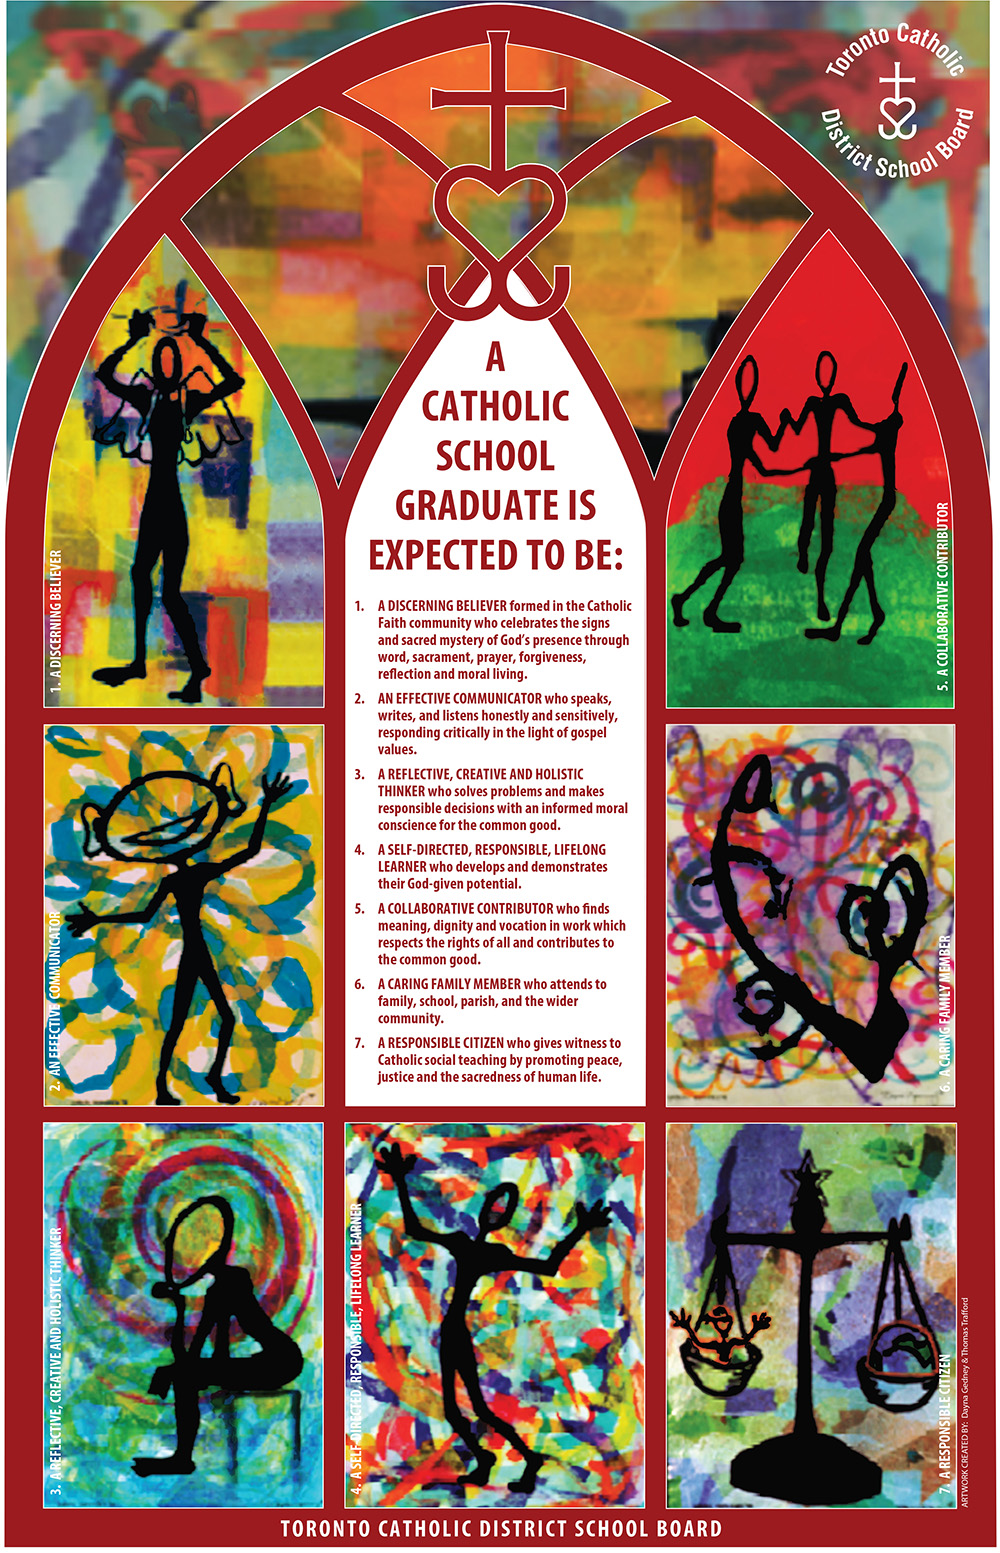 Catholic School Graduate Expections poster document link